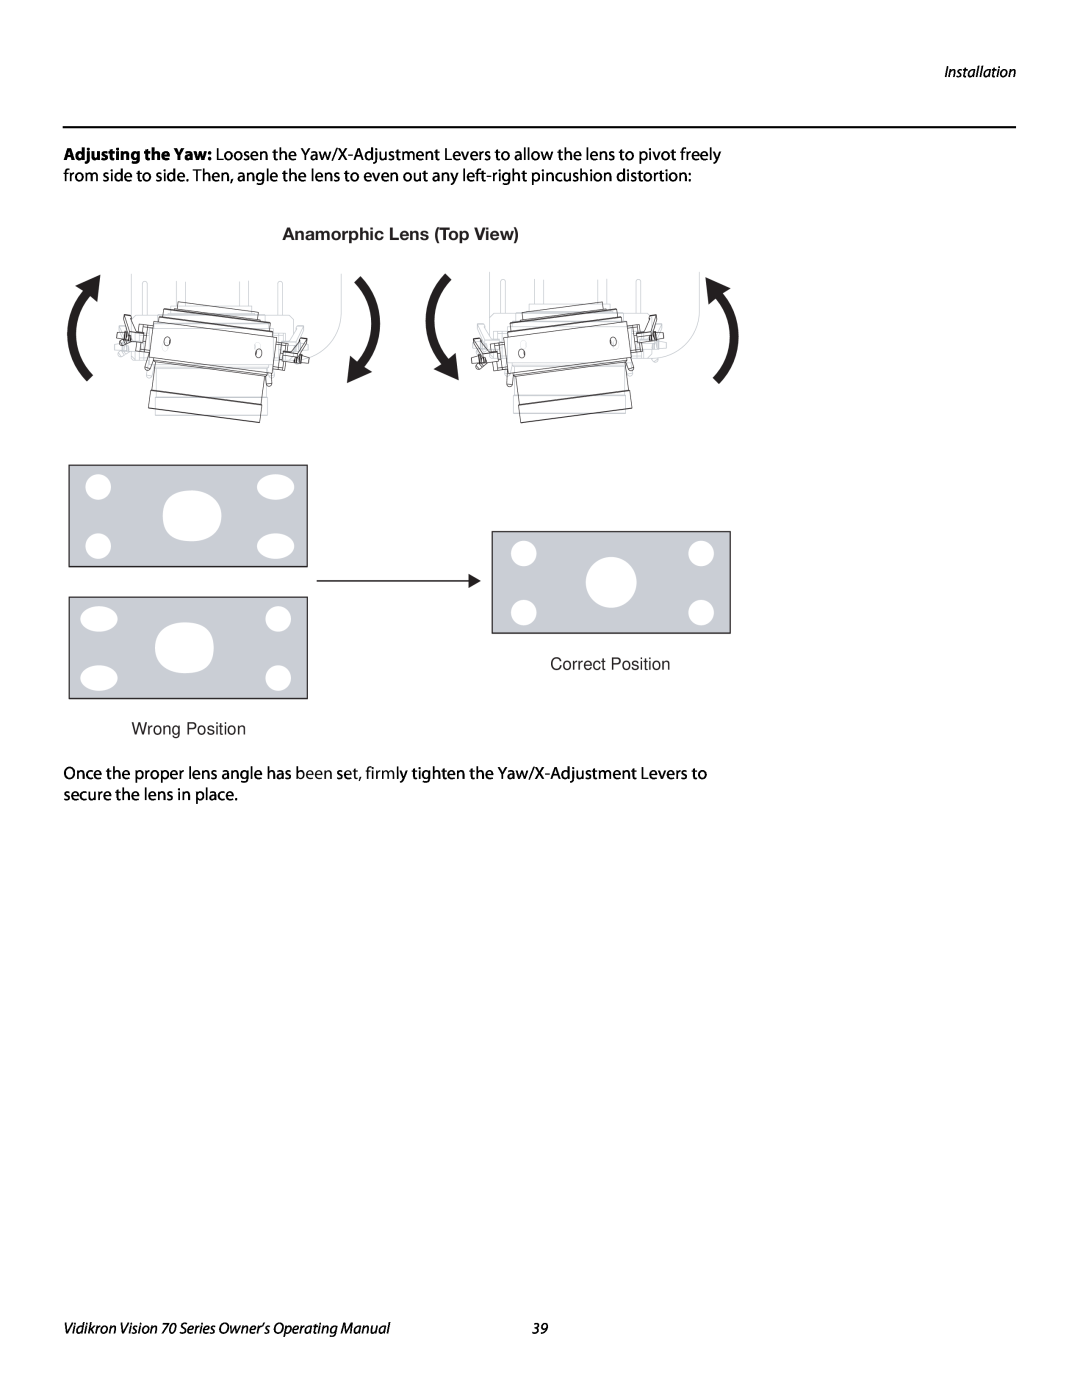 Vidikron SERIES 1080p manual Anamorphic Lens Top View, Installation, Vidikron Vision 70 Series Owner’s Operating Manual 